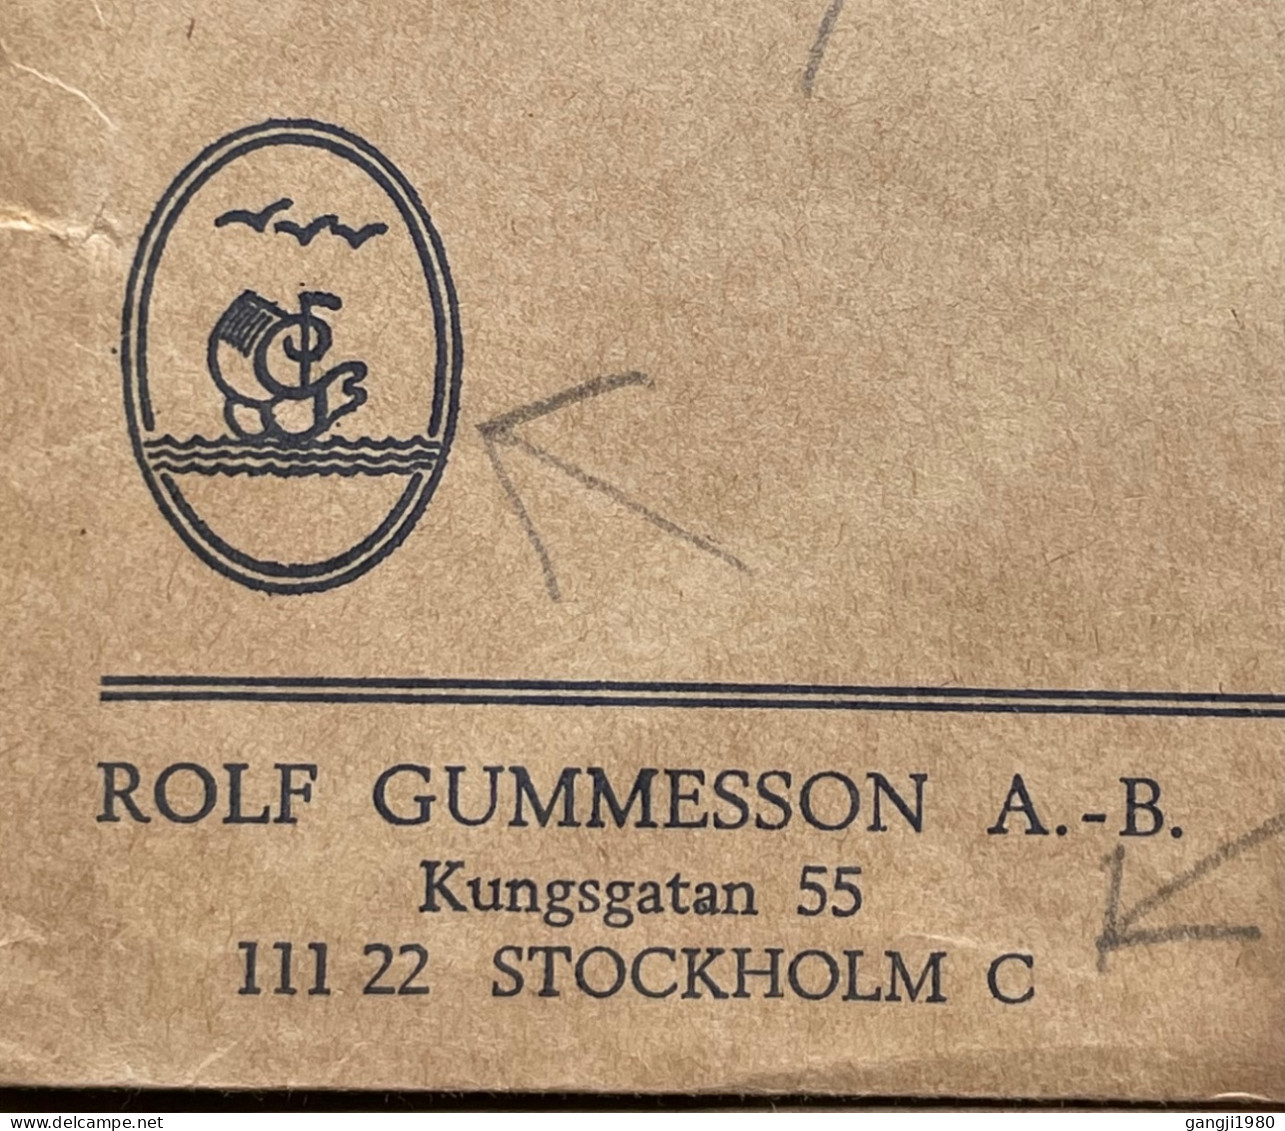 SWEDEN 1975, COVER USED TO USA, STAMP DEALER, ROLF GUMMESSON, SHIP, TARGET SHOOTING & PRINCE EUGEN PAINTER, MACHINE SLOG - Covers & Documents